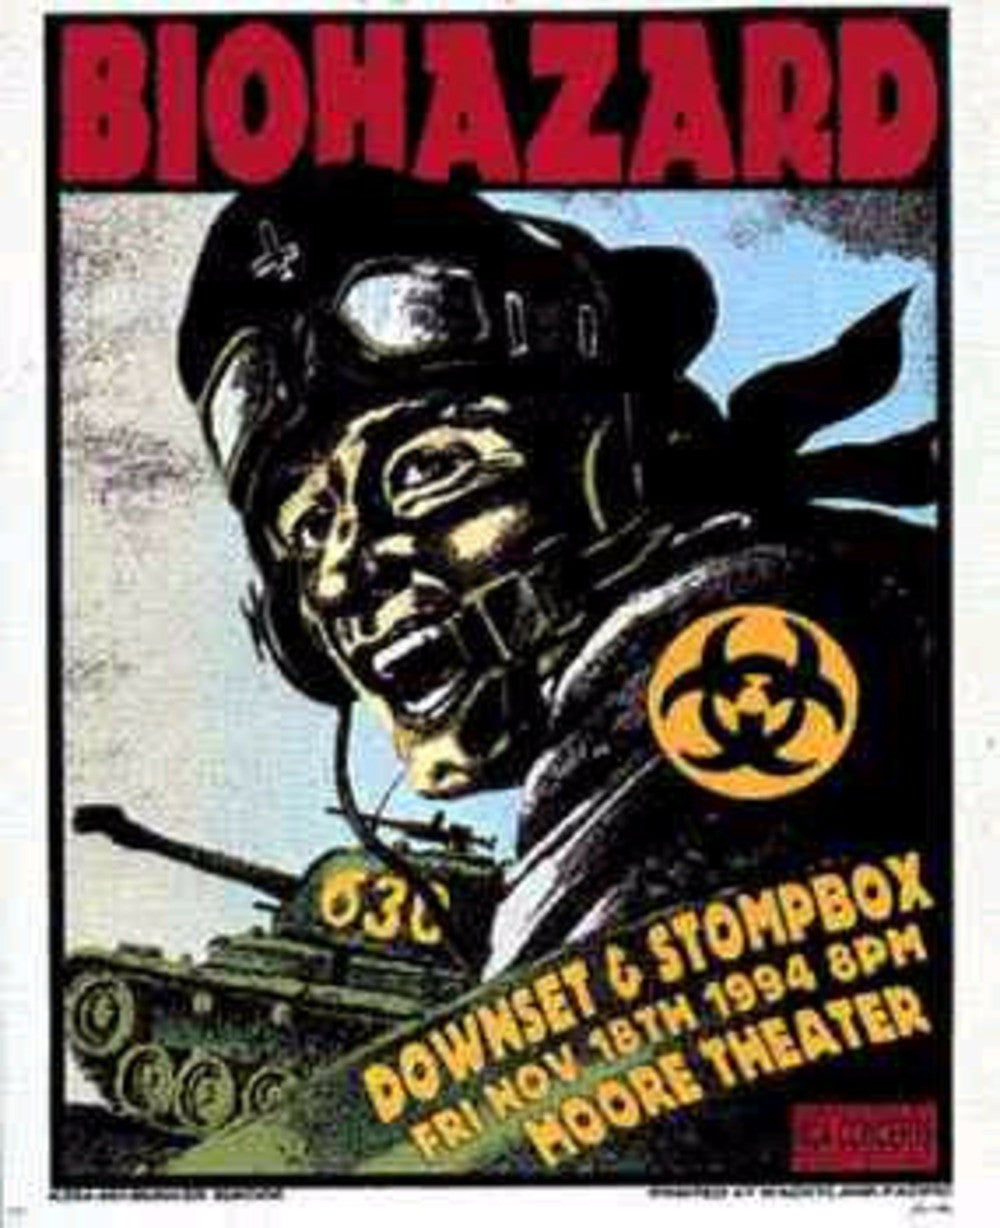 Kozik - 1994 - Biohazard Concert Poster